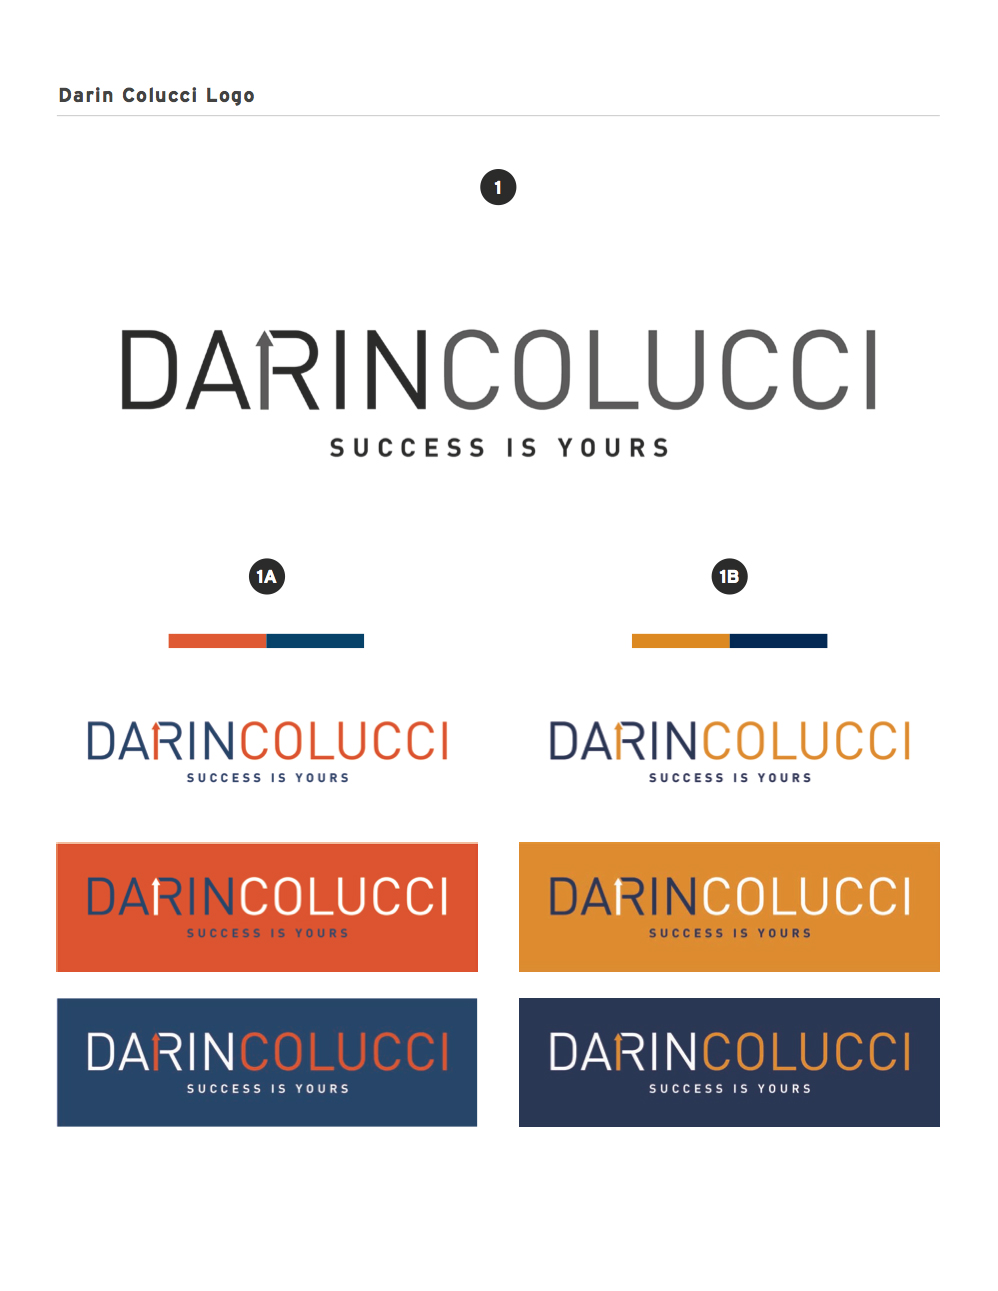 Darin Colucci logo Options